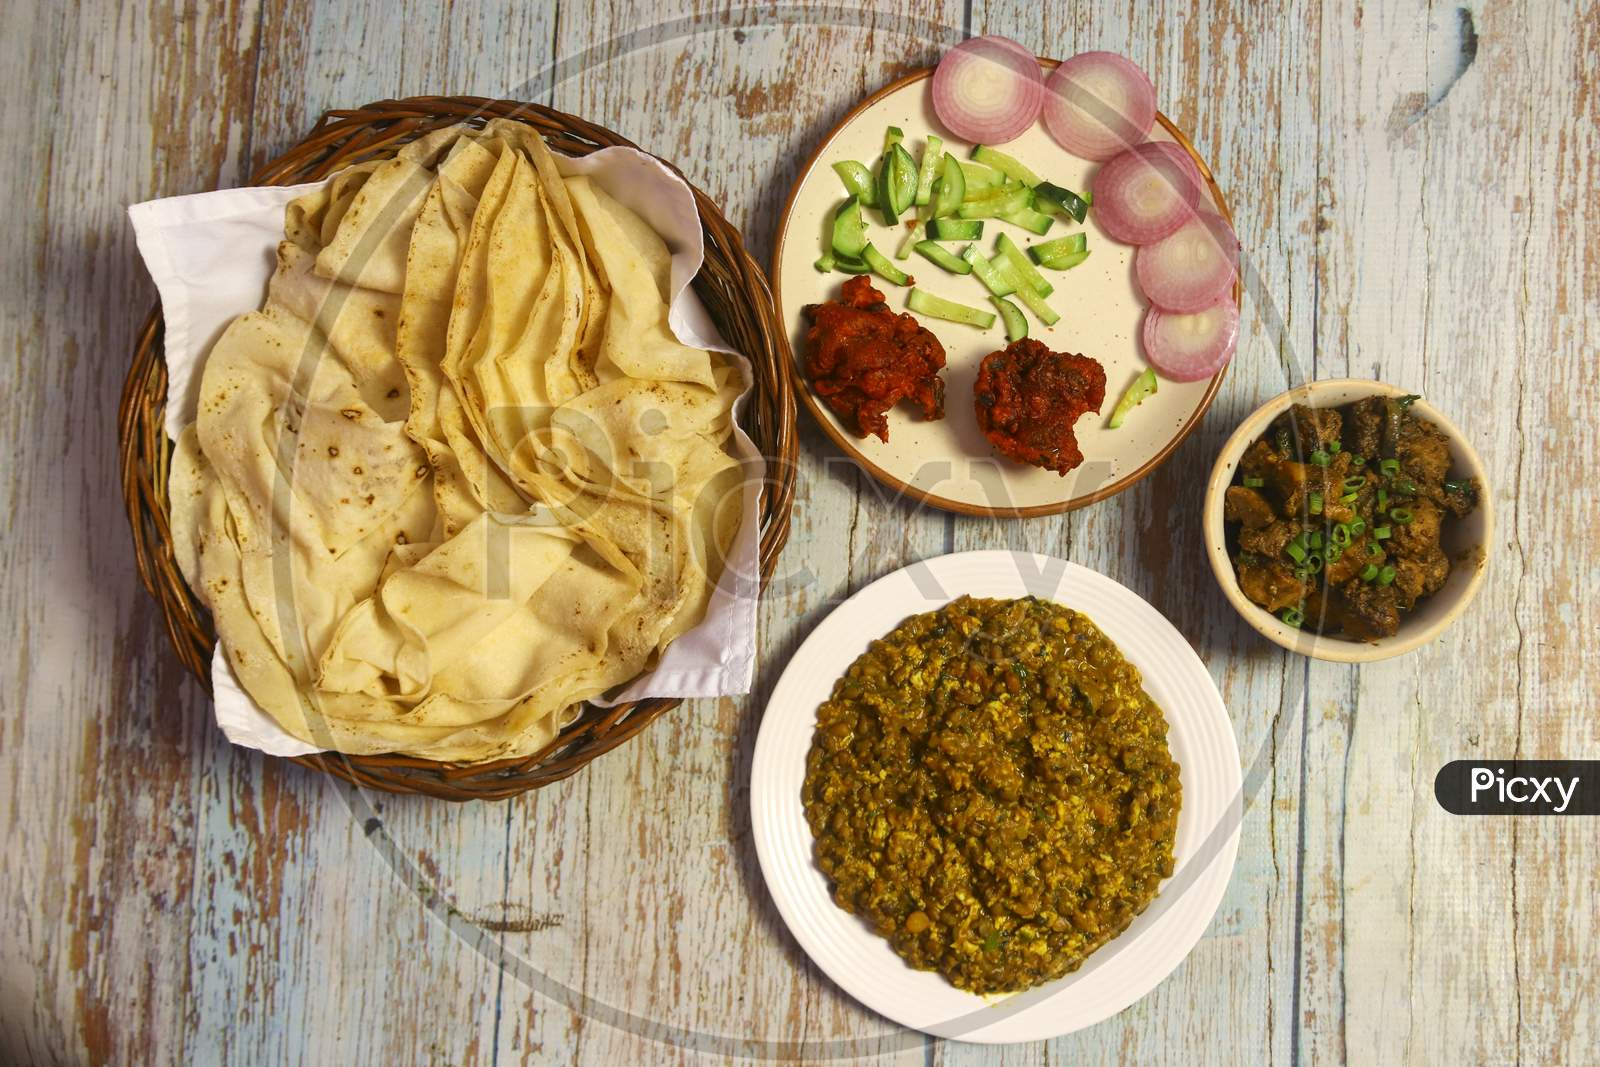 Rumali roti, daal tarka, chicken kosha, chicken pakoda and salad